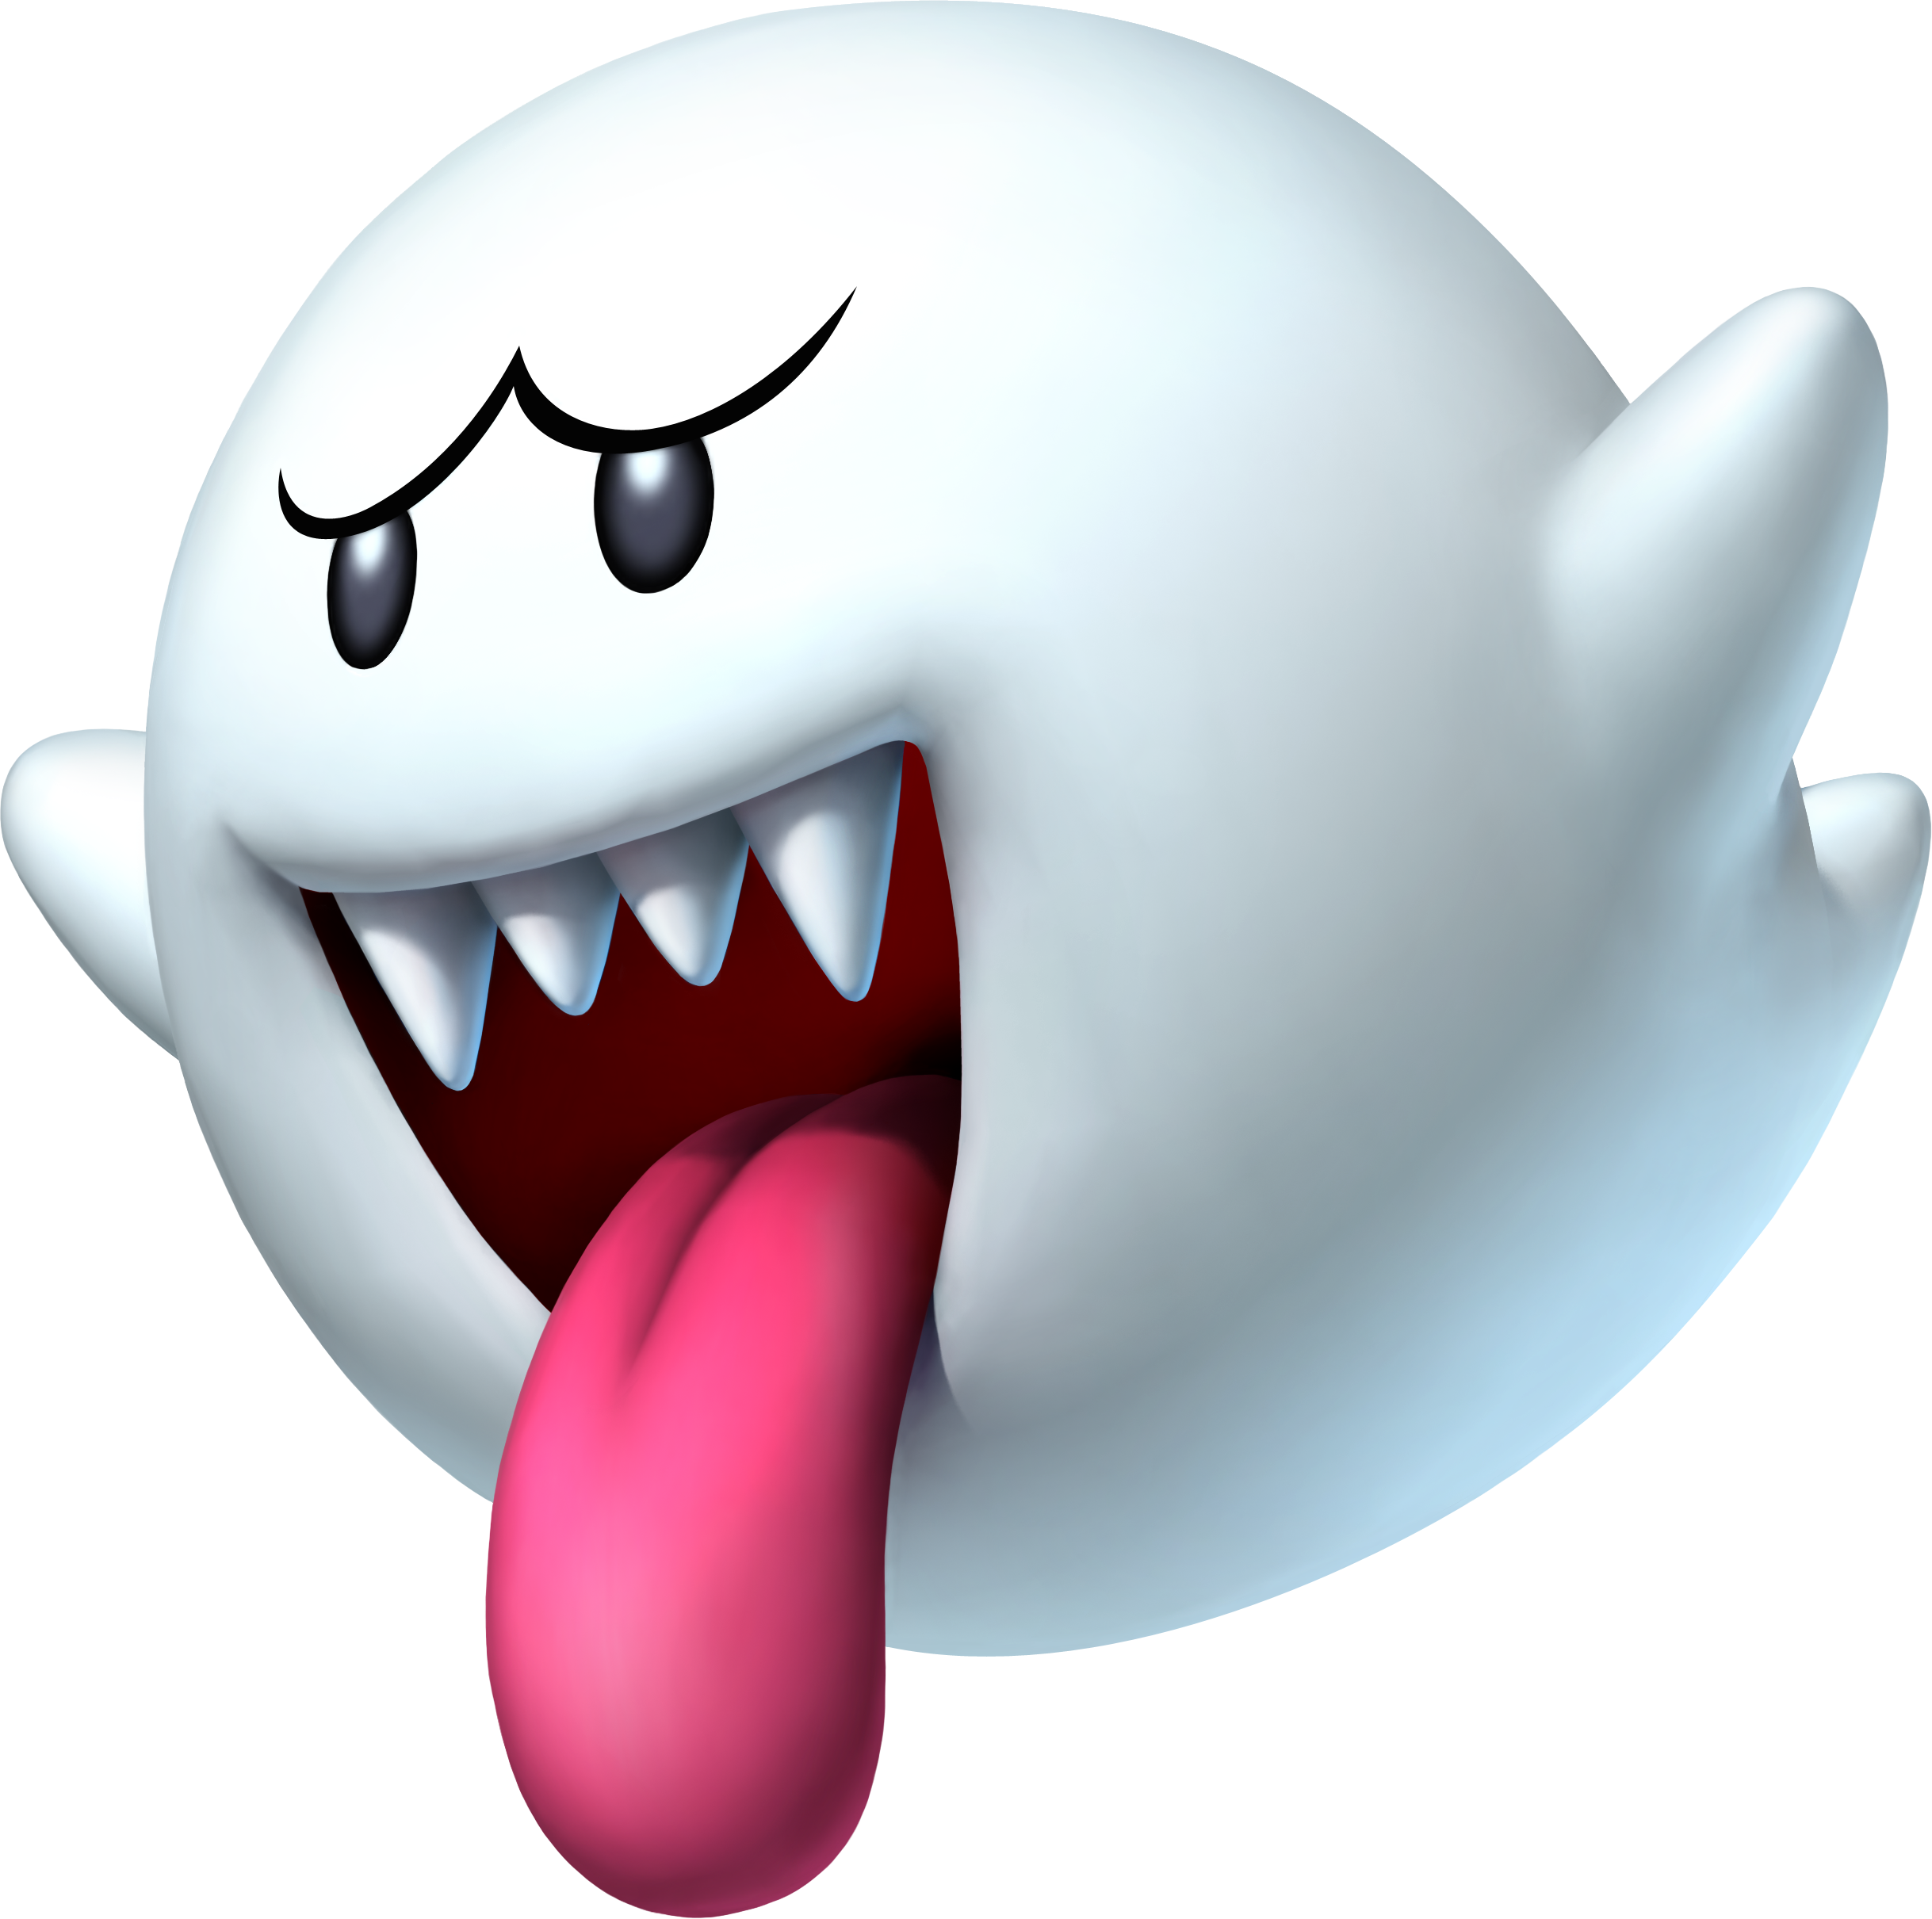 King Boo - Super Mario Bros Ghost (2437x2421)